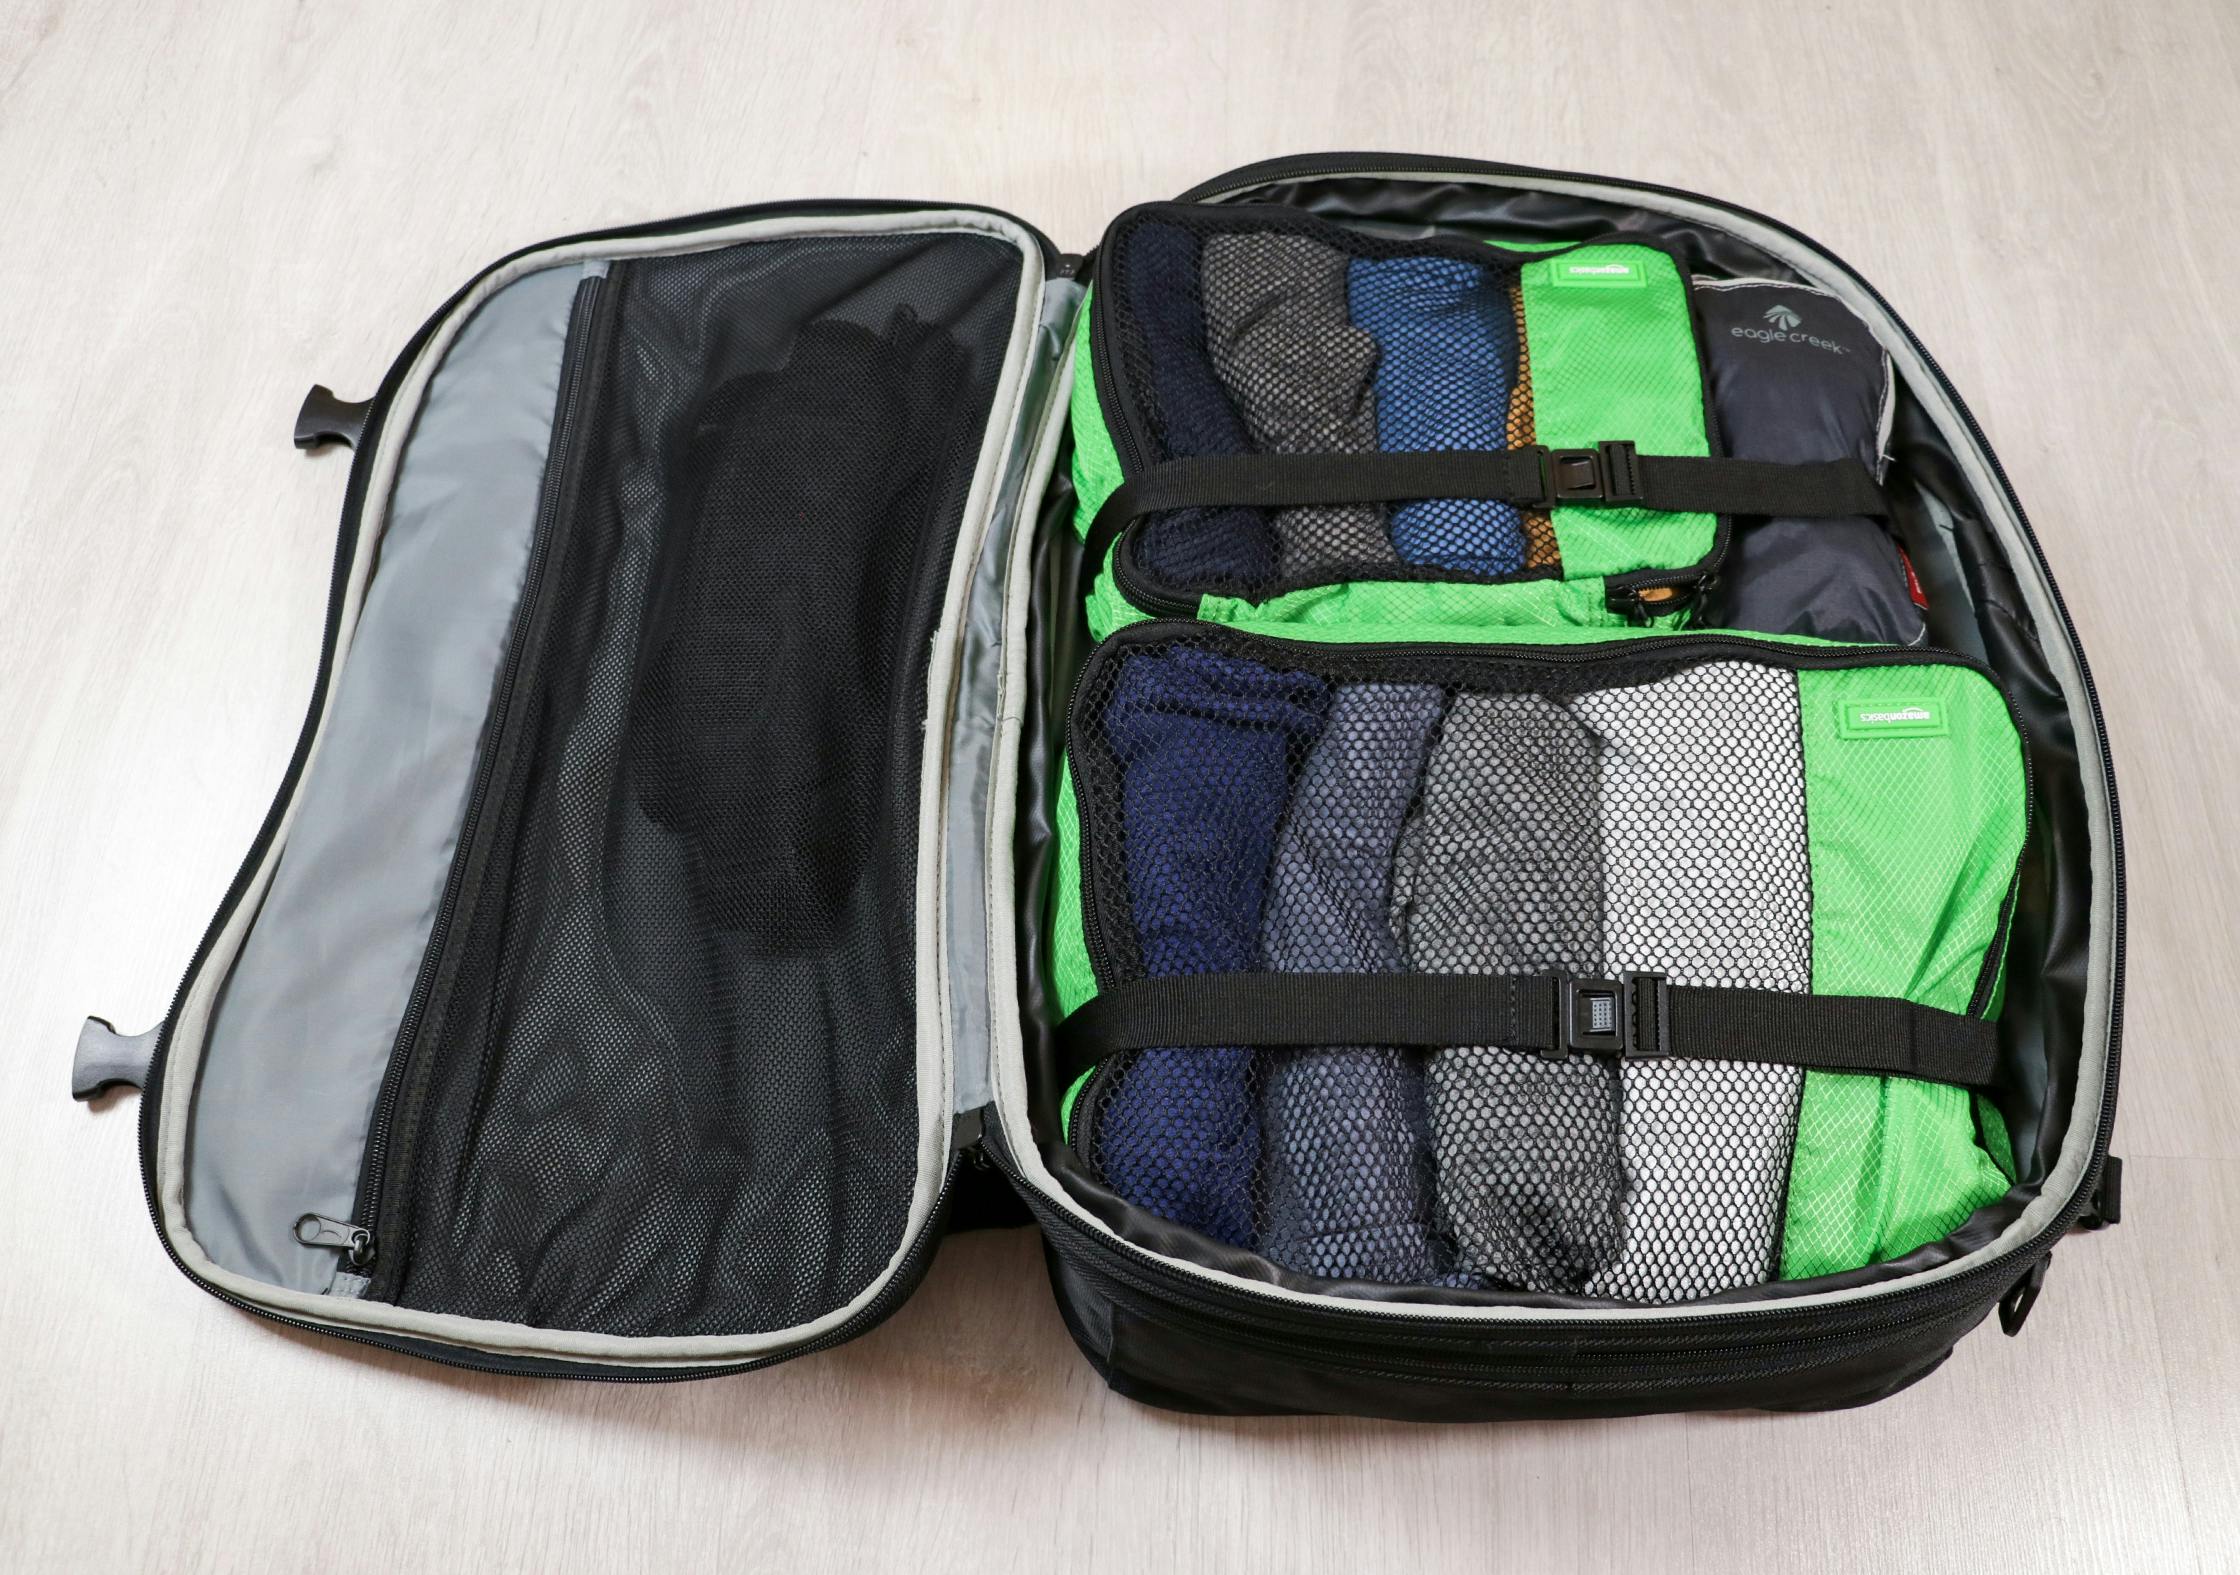 AmazonBasics Packing Cubes In The AmazonBasics Carry-On Travel Backpack